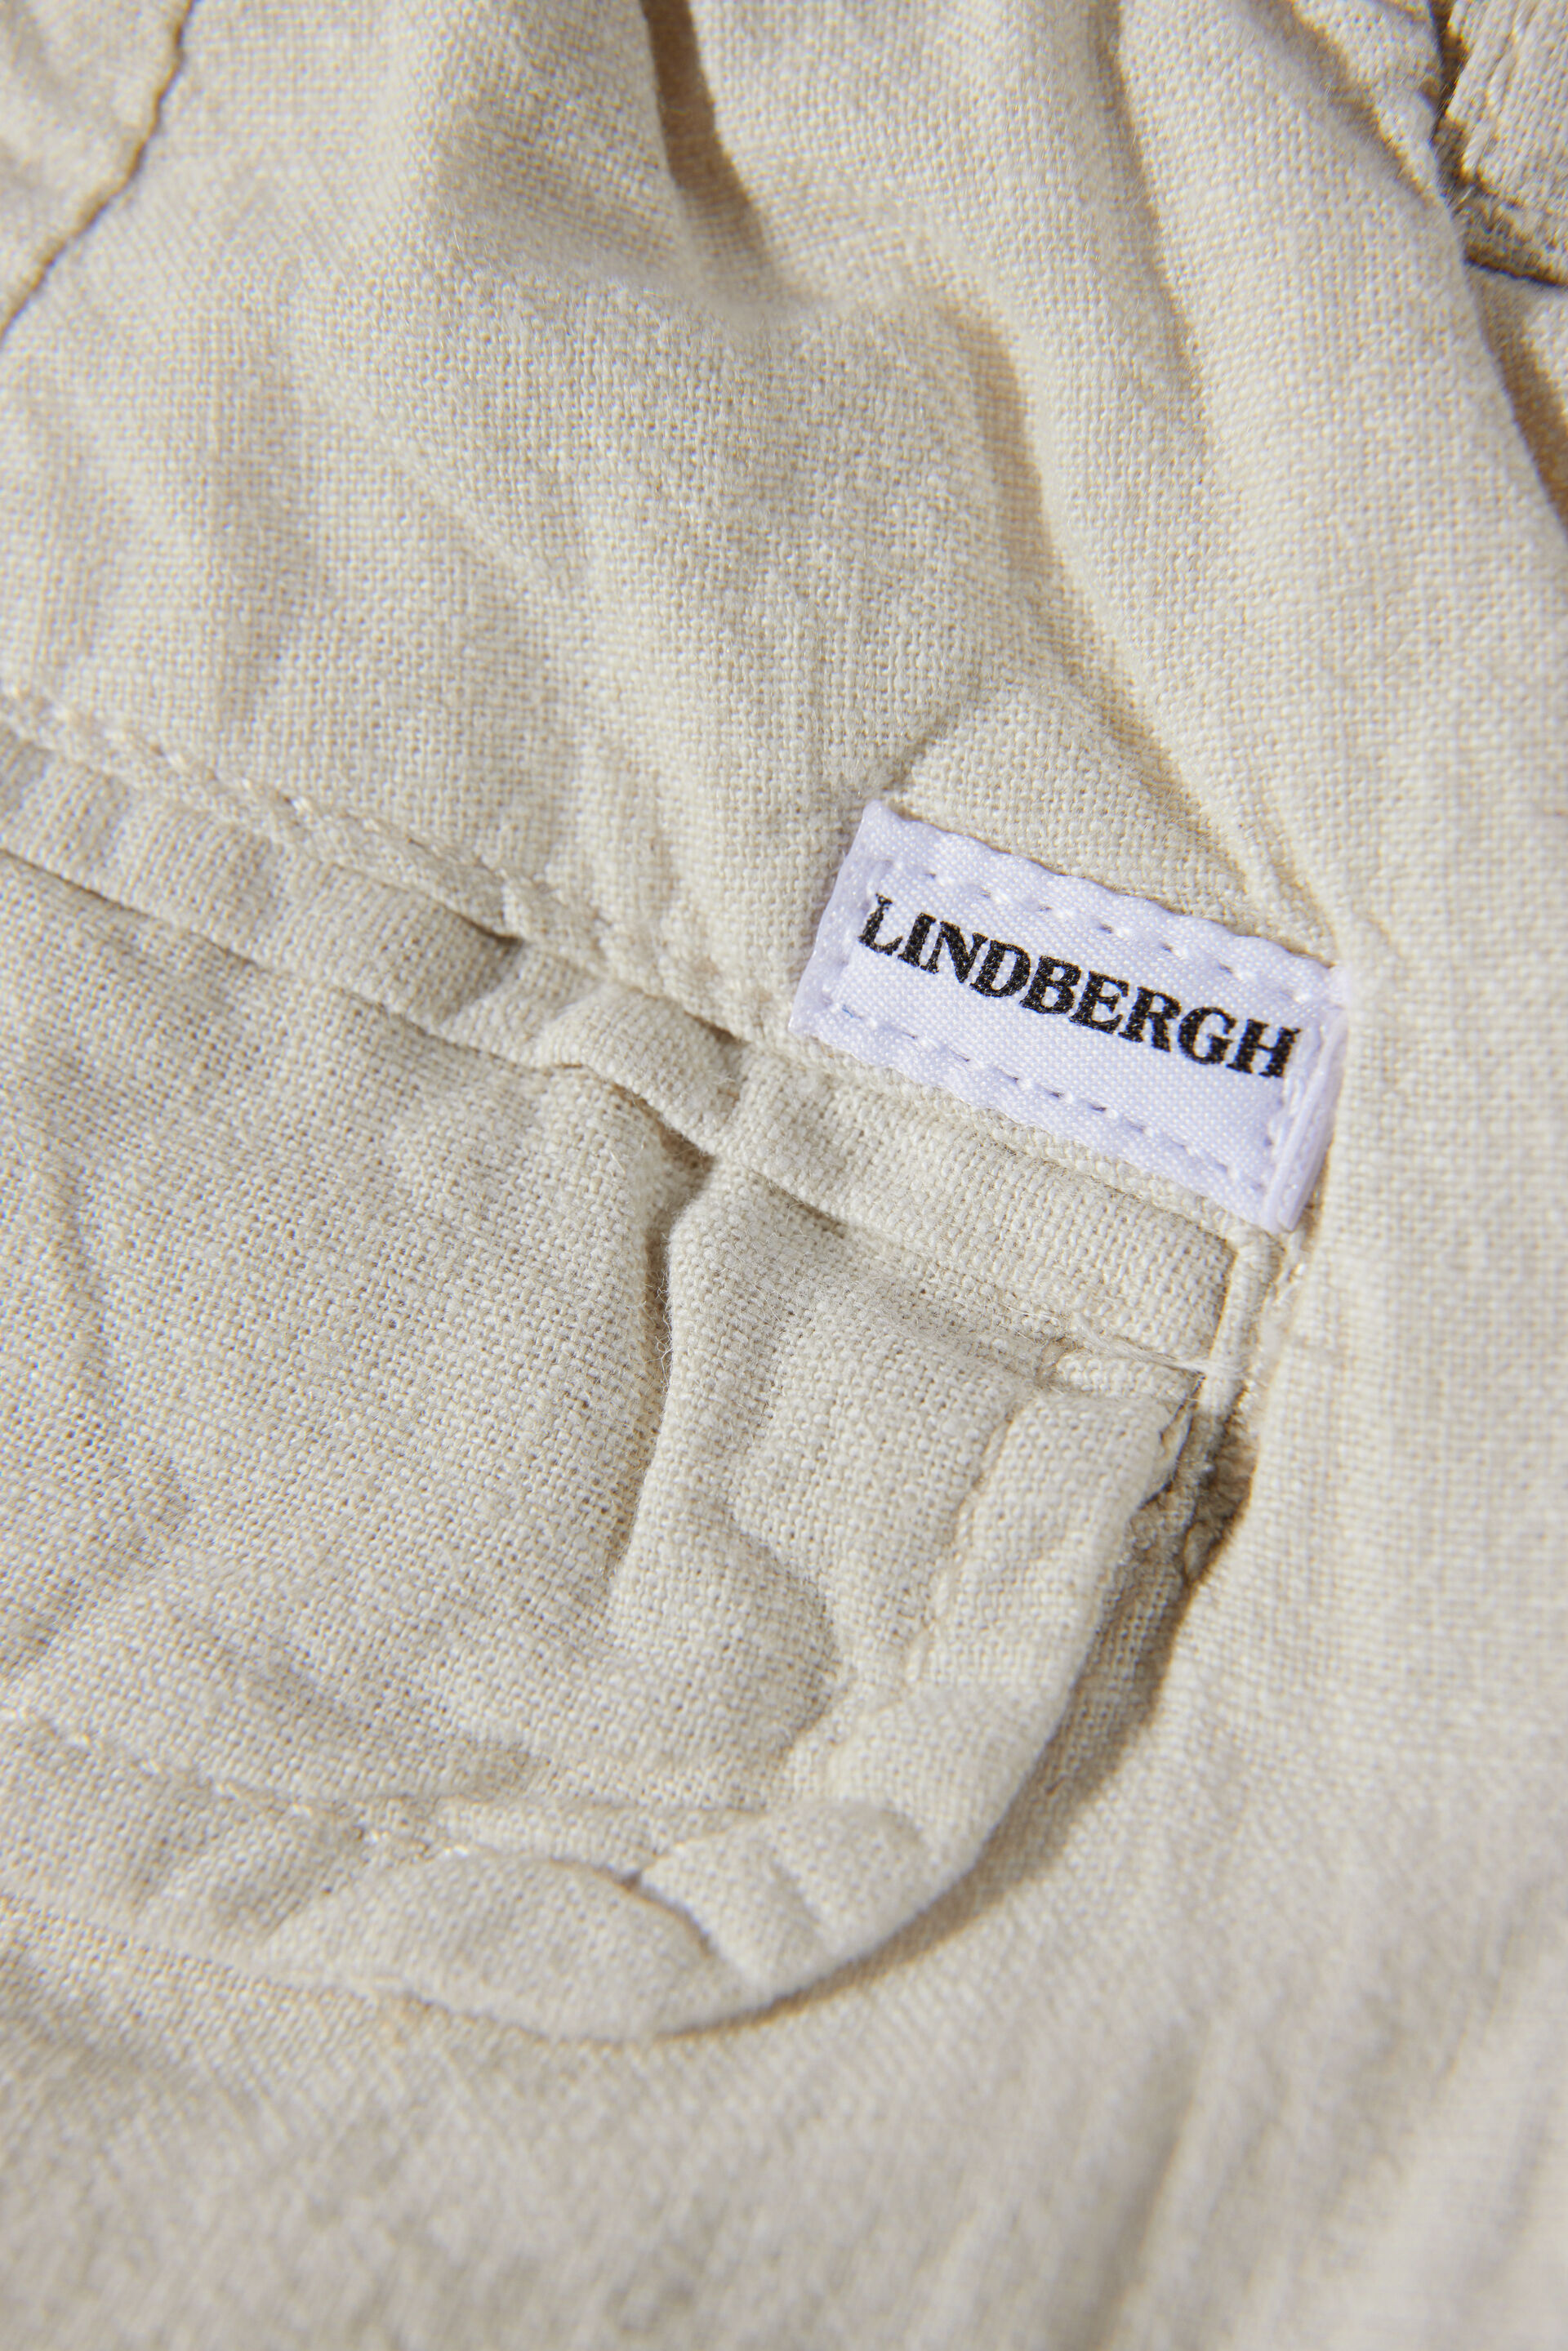 Lindbergh  30-008023